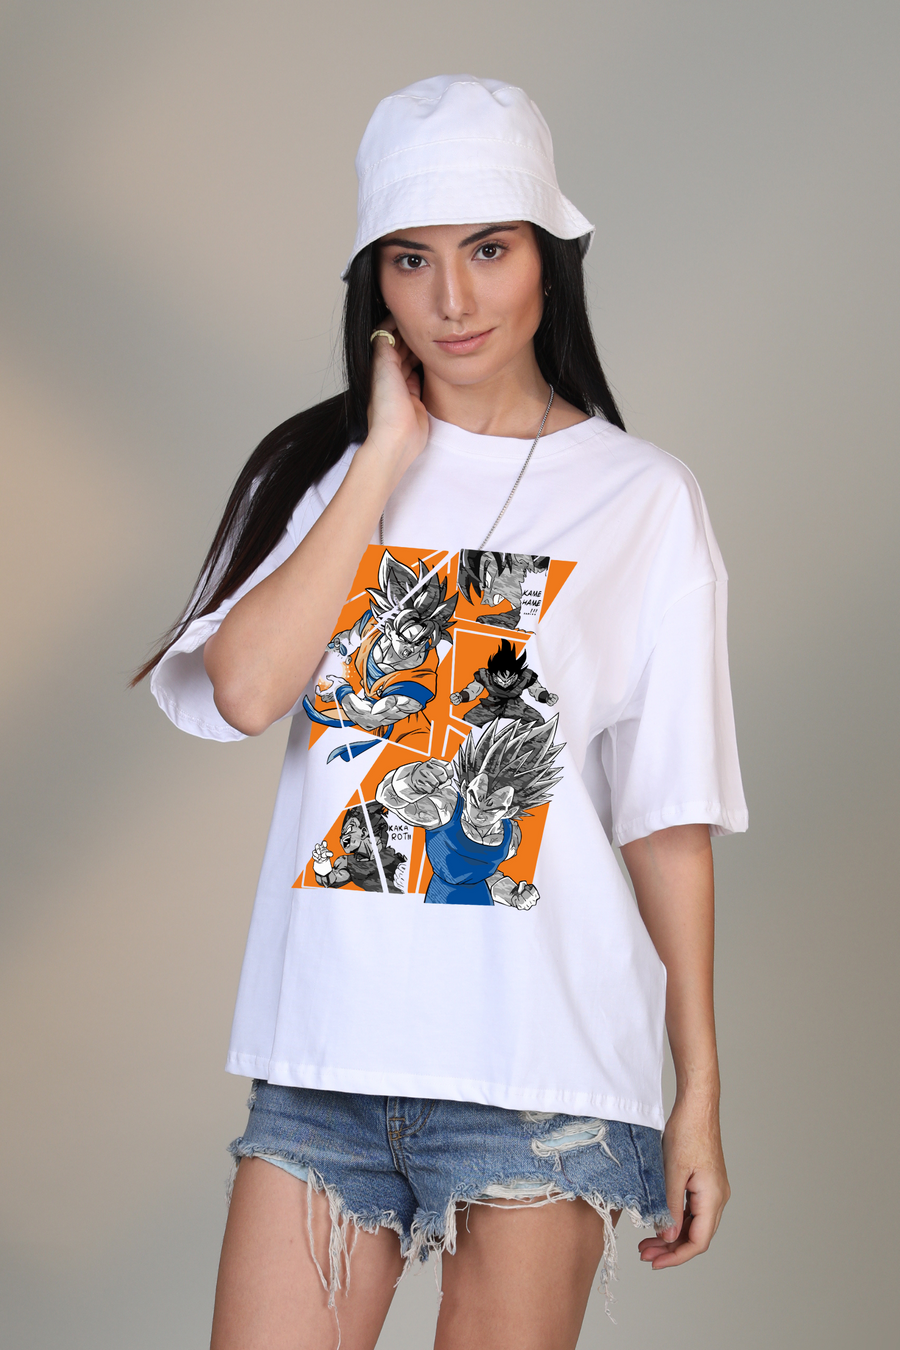 Dragon Ball Z- Oversized t-shirt